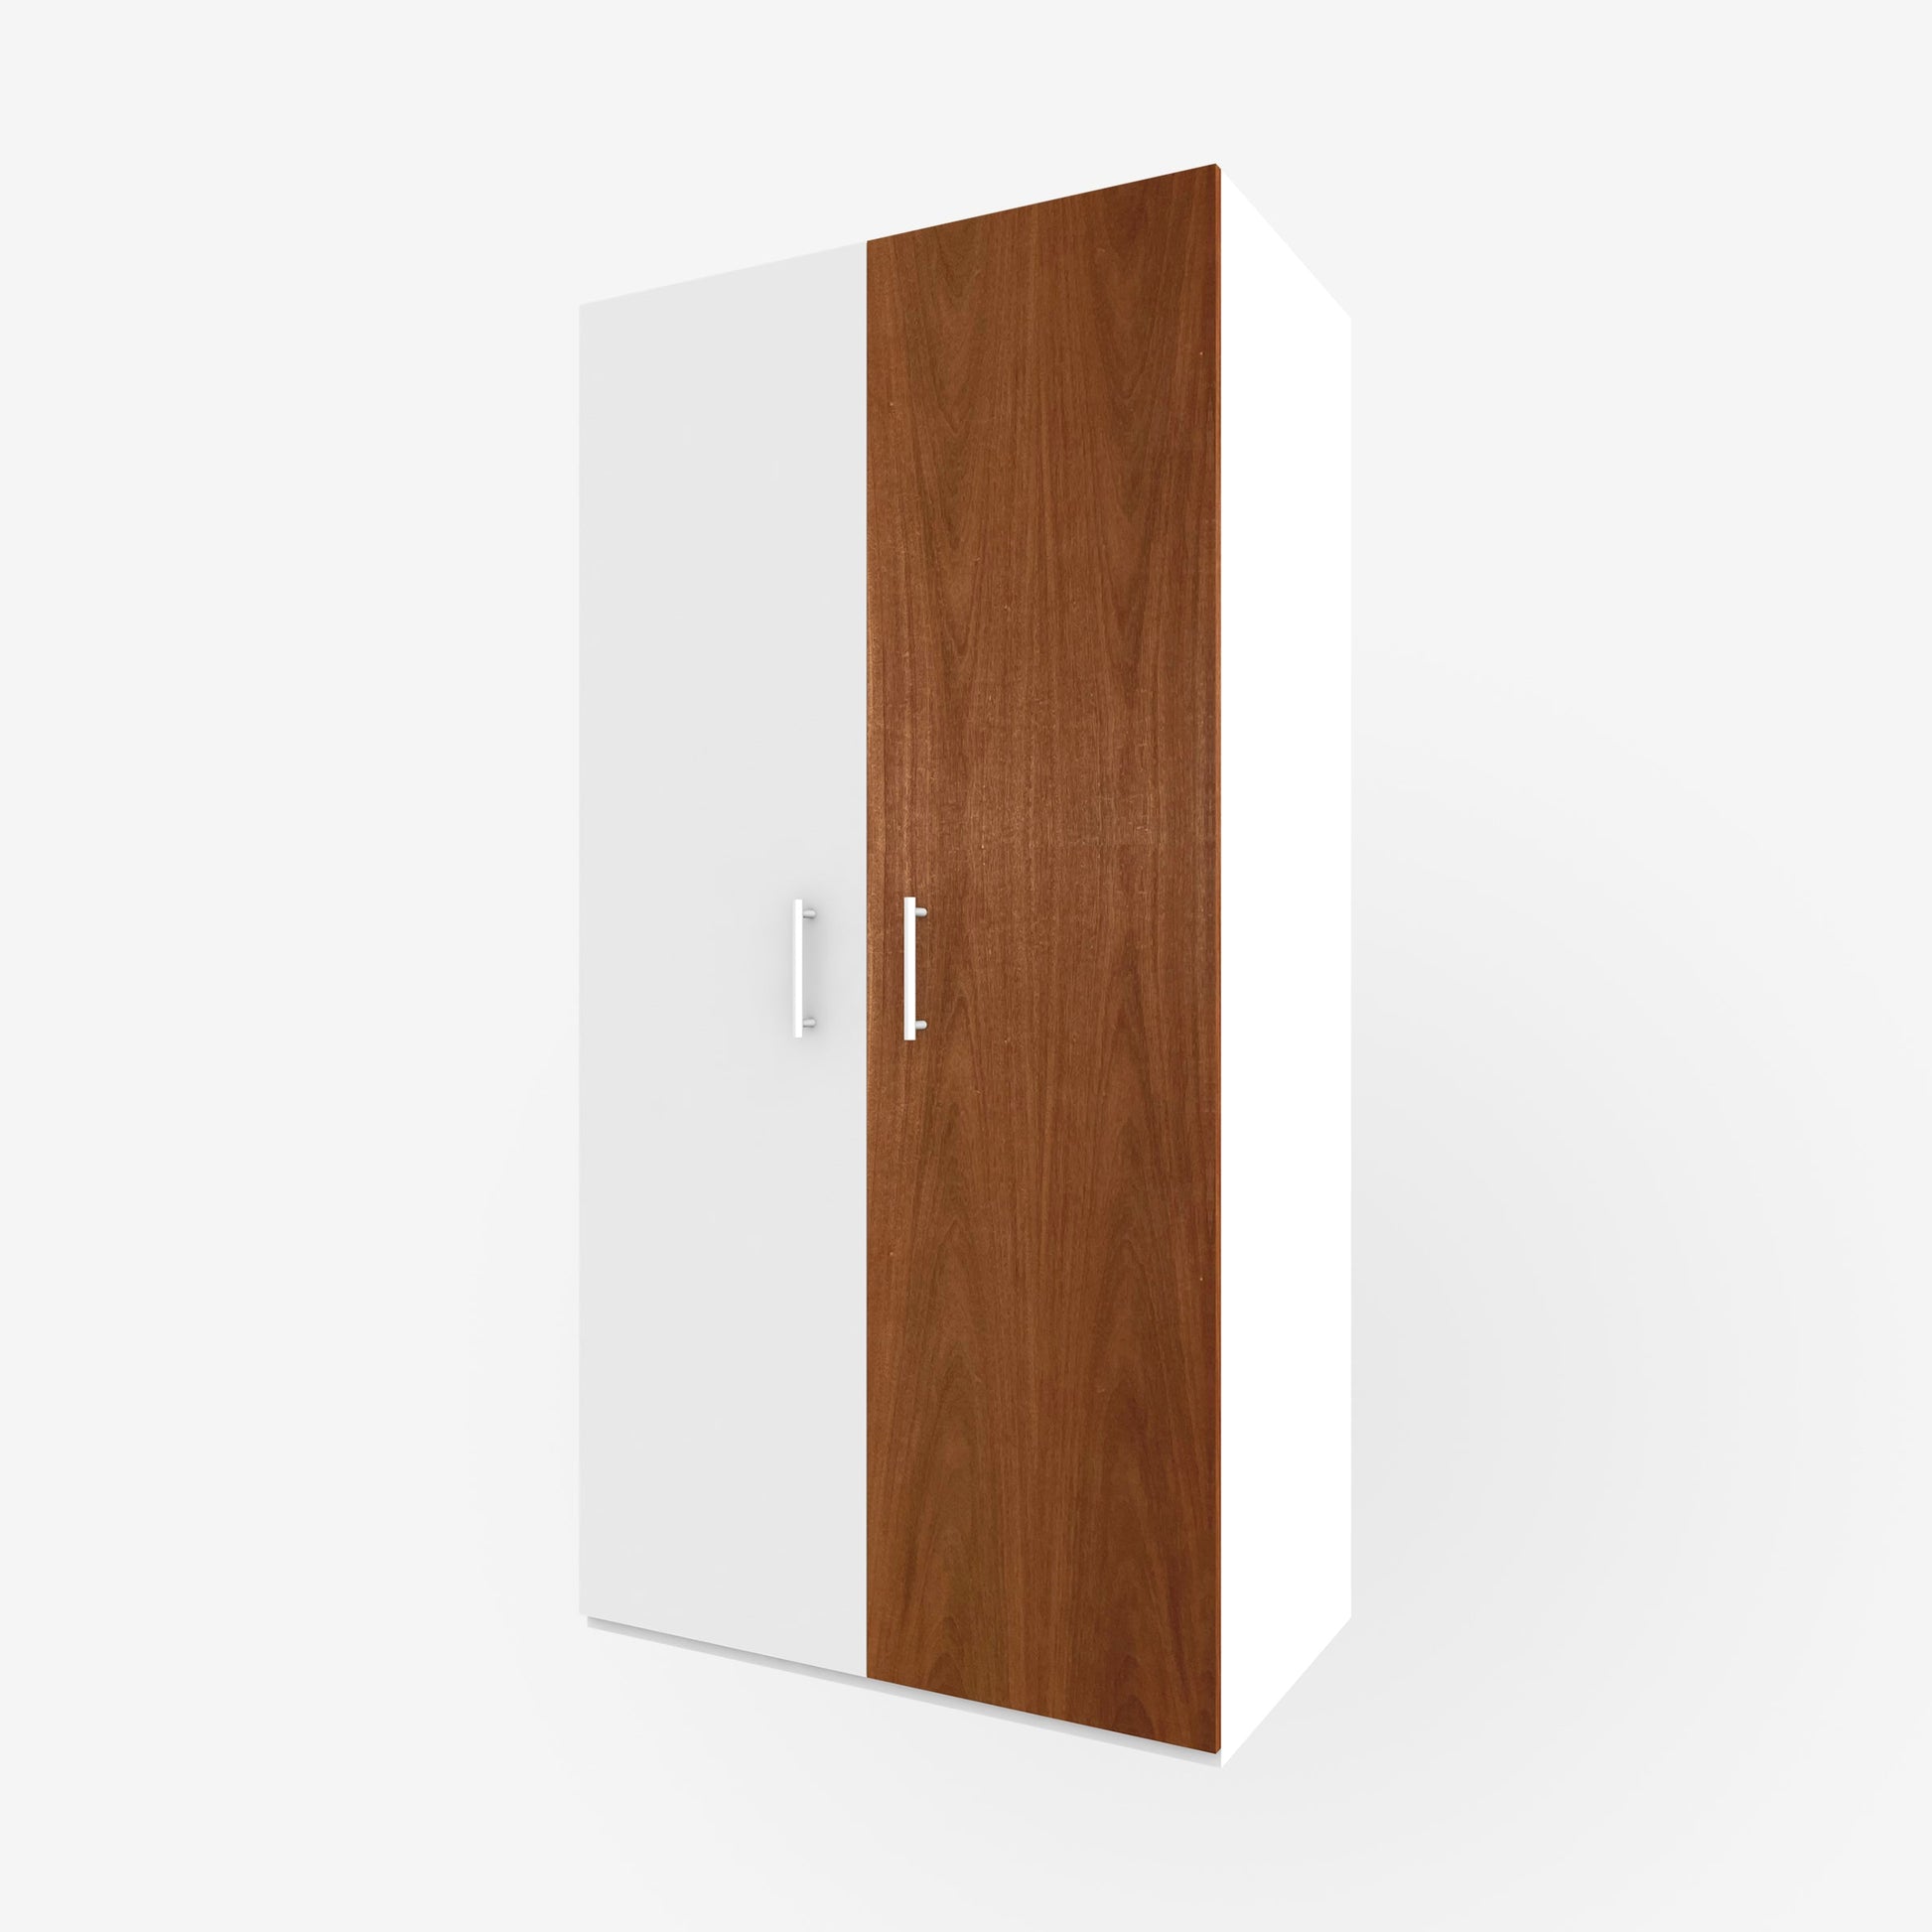 19.5" x 79" real wood veneer mahogany slab door for Ikea or Swedeboxx pax closet cabinet